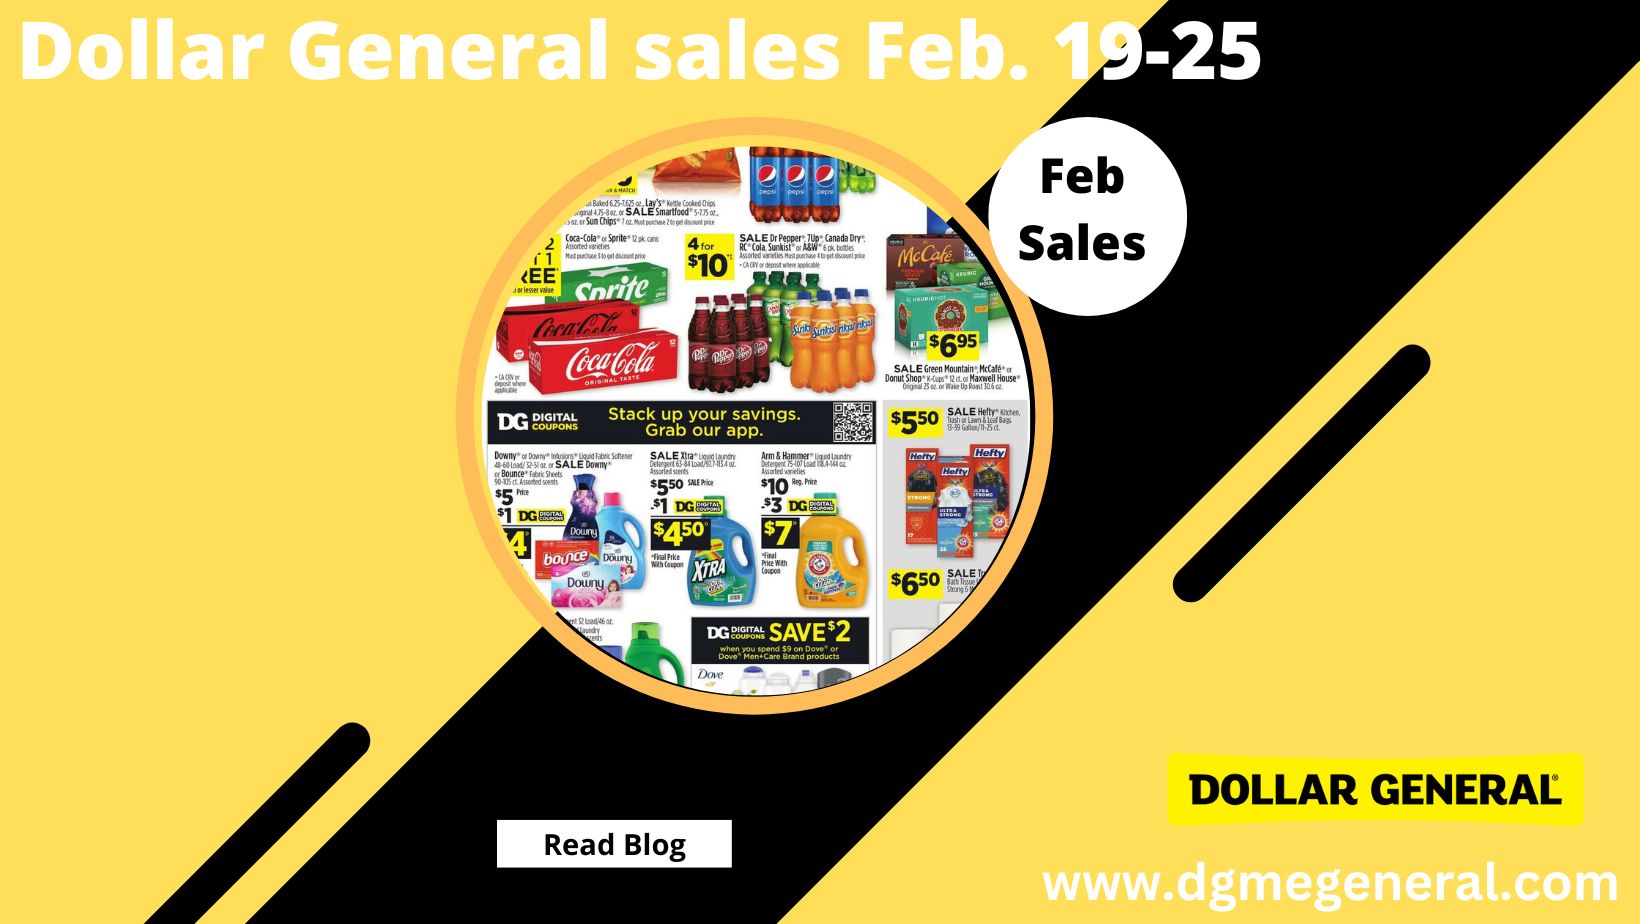 Limited Time Offer - Dollar General sales Feb. 19-25